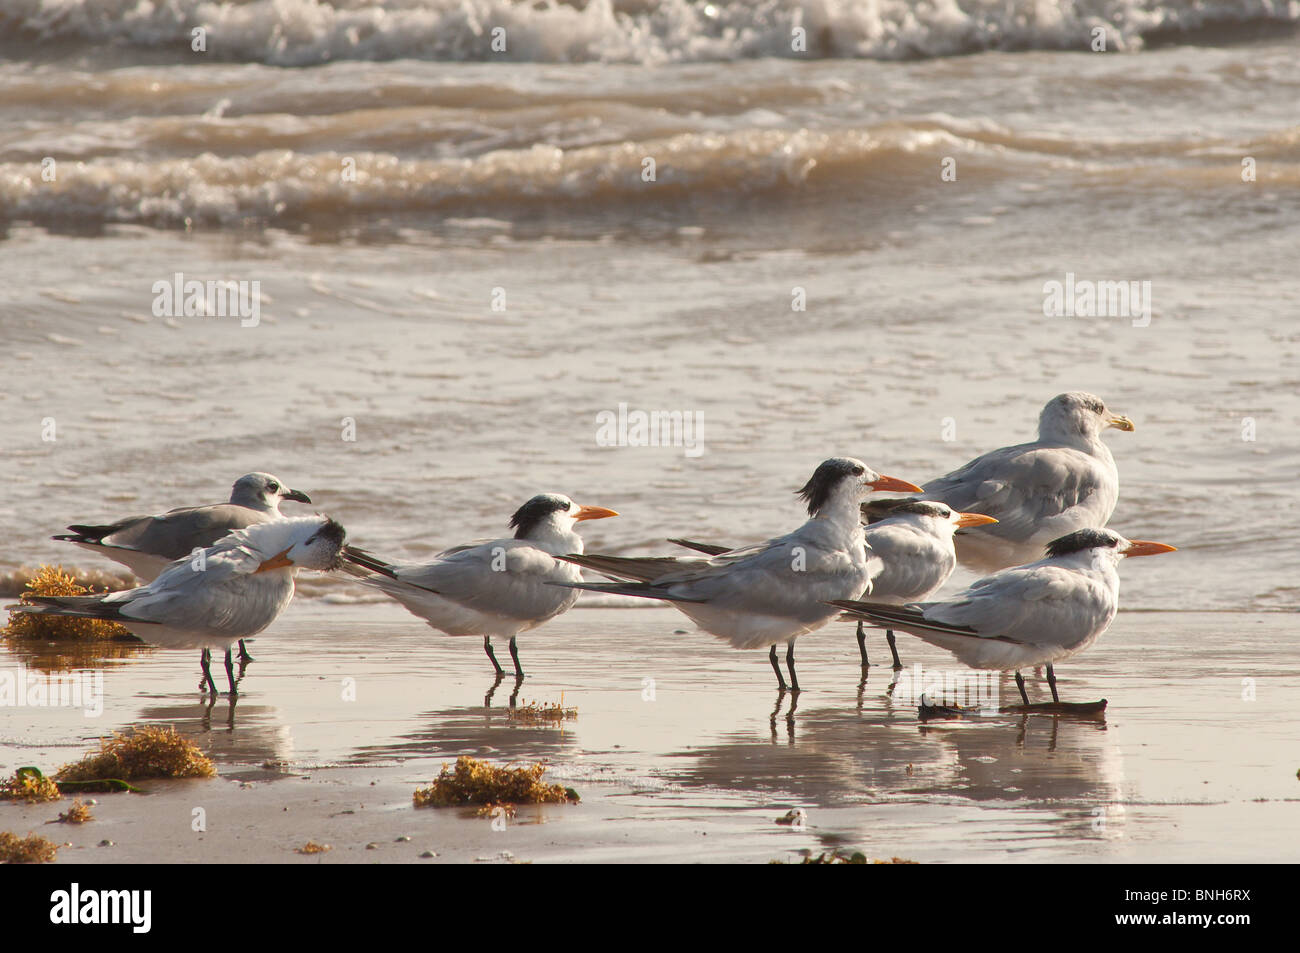 Texas, Padre Island. Royal terns in Padre Island National Seashore. Stock Photo